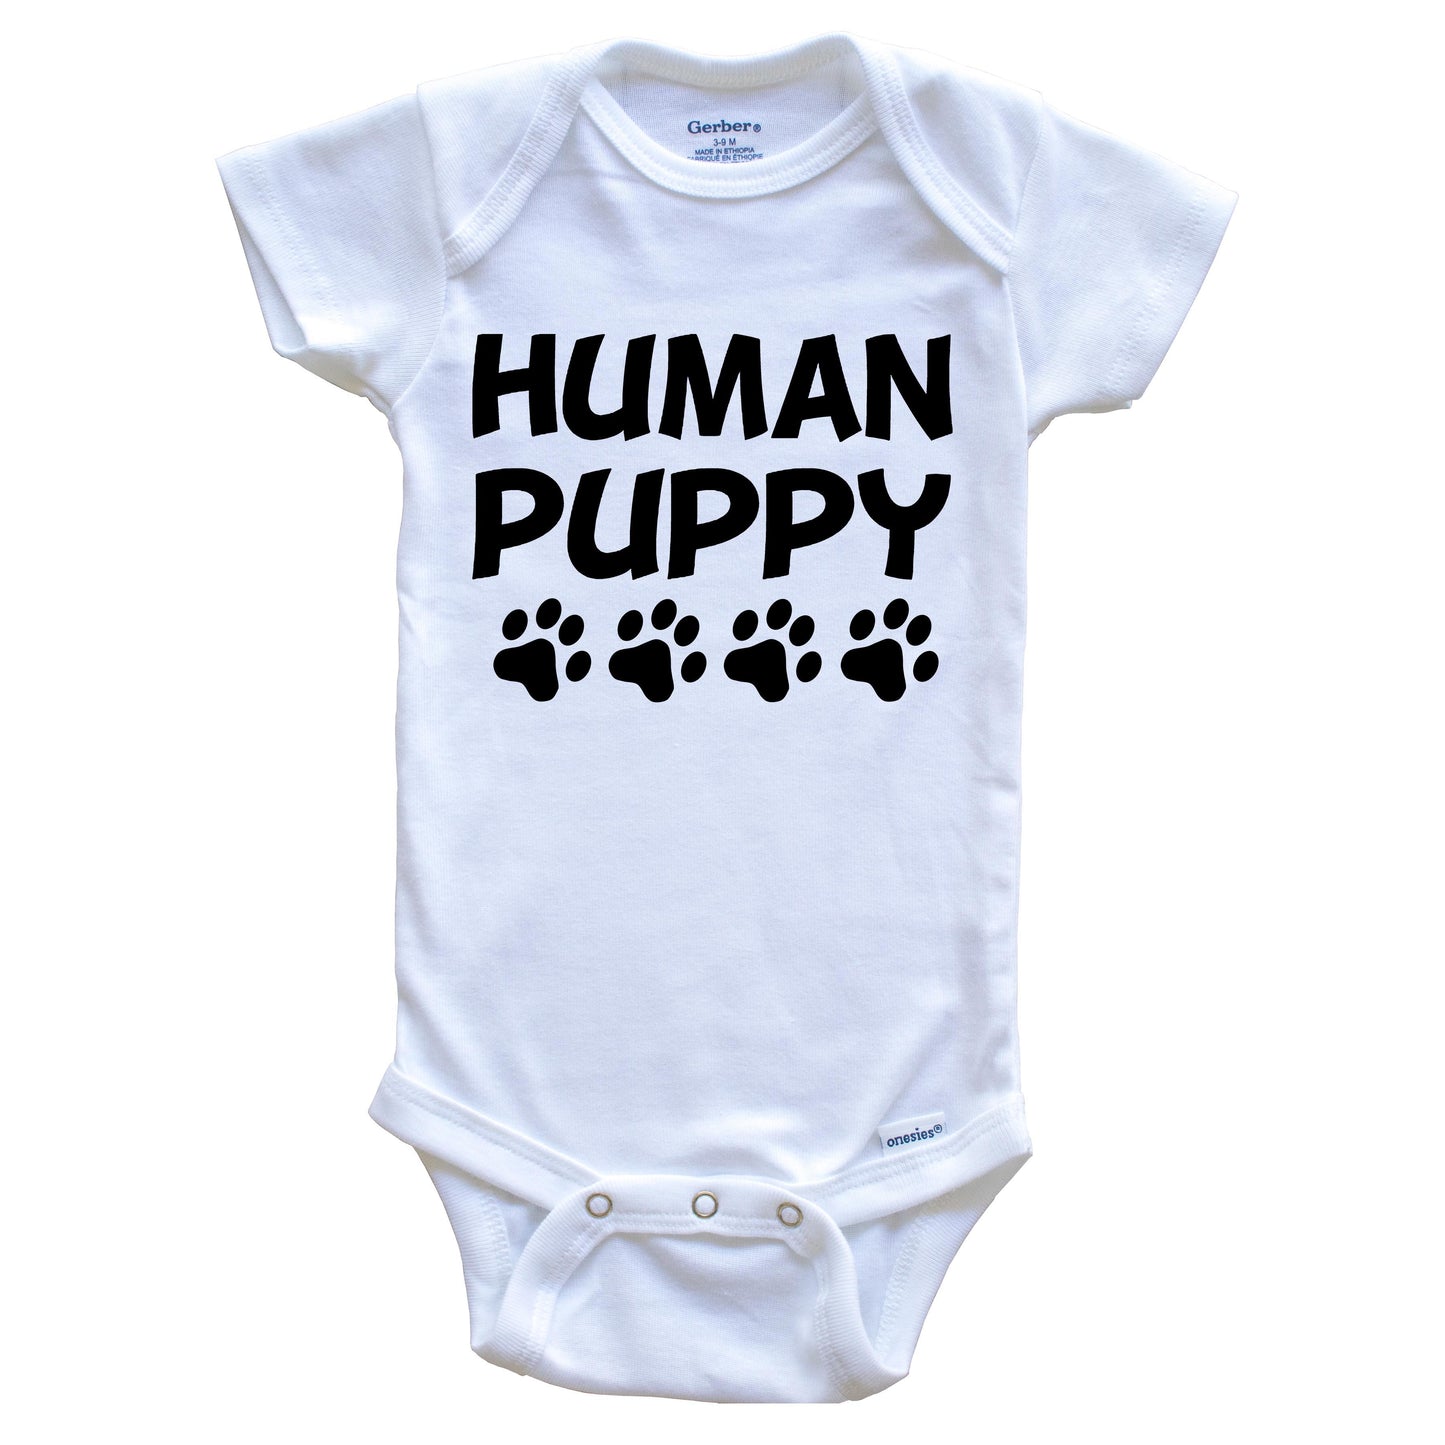 Human Puppy Funny Dog Baby Onesie